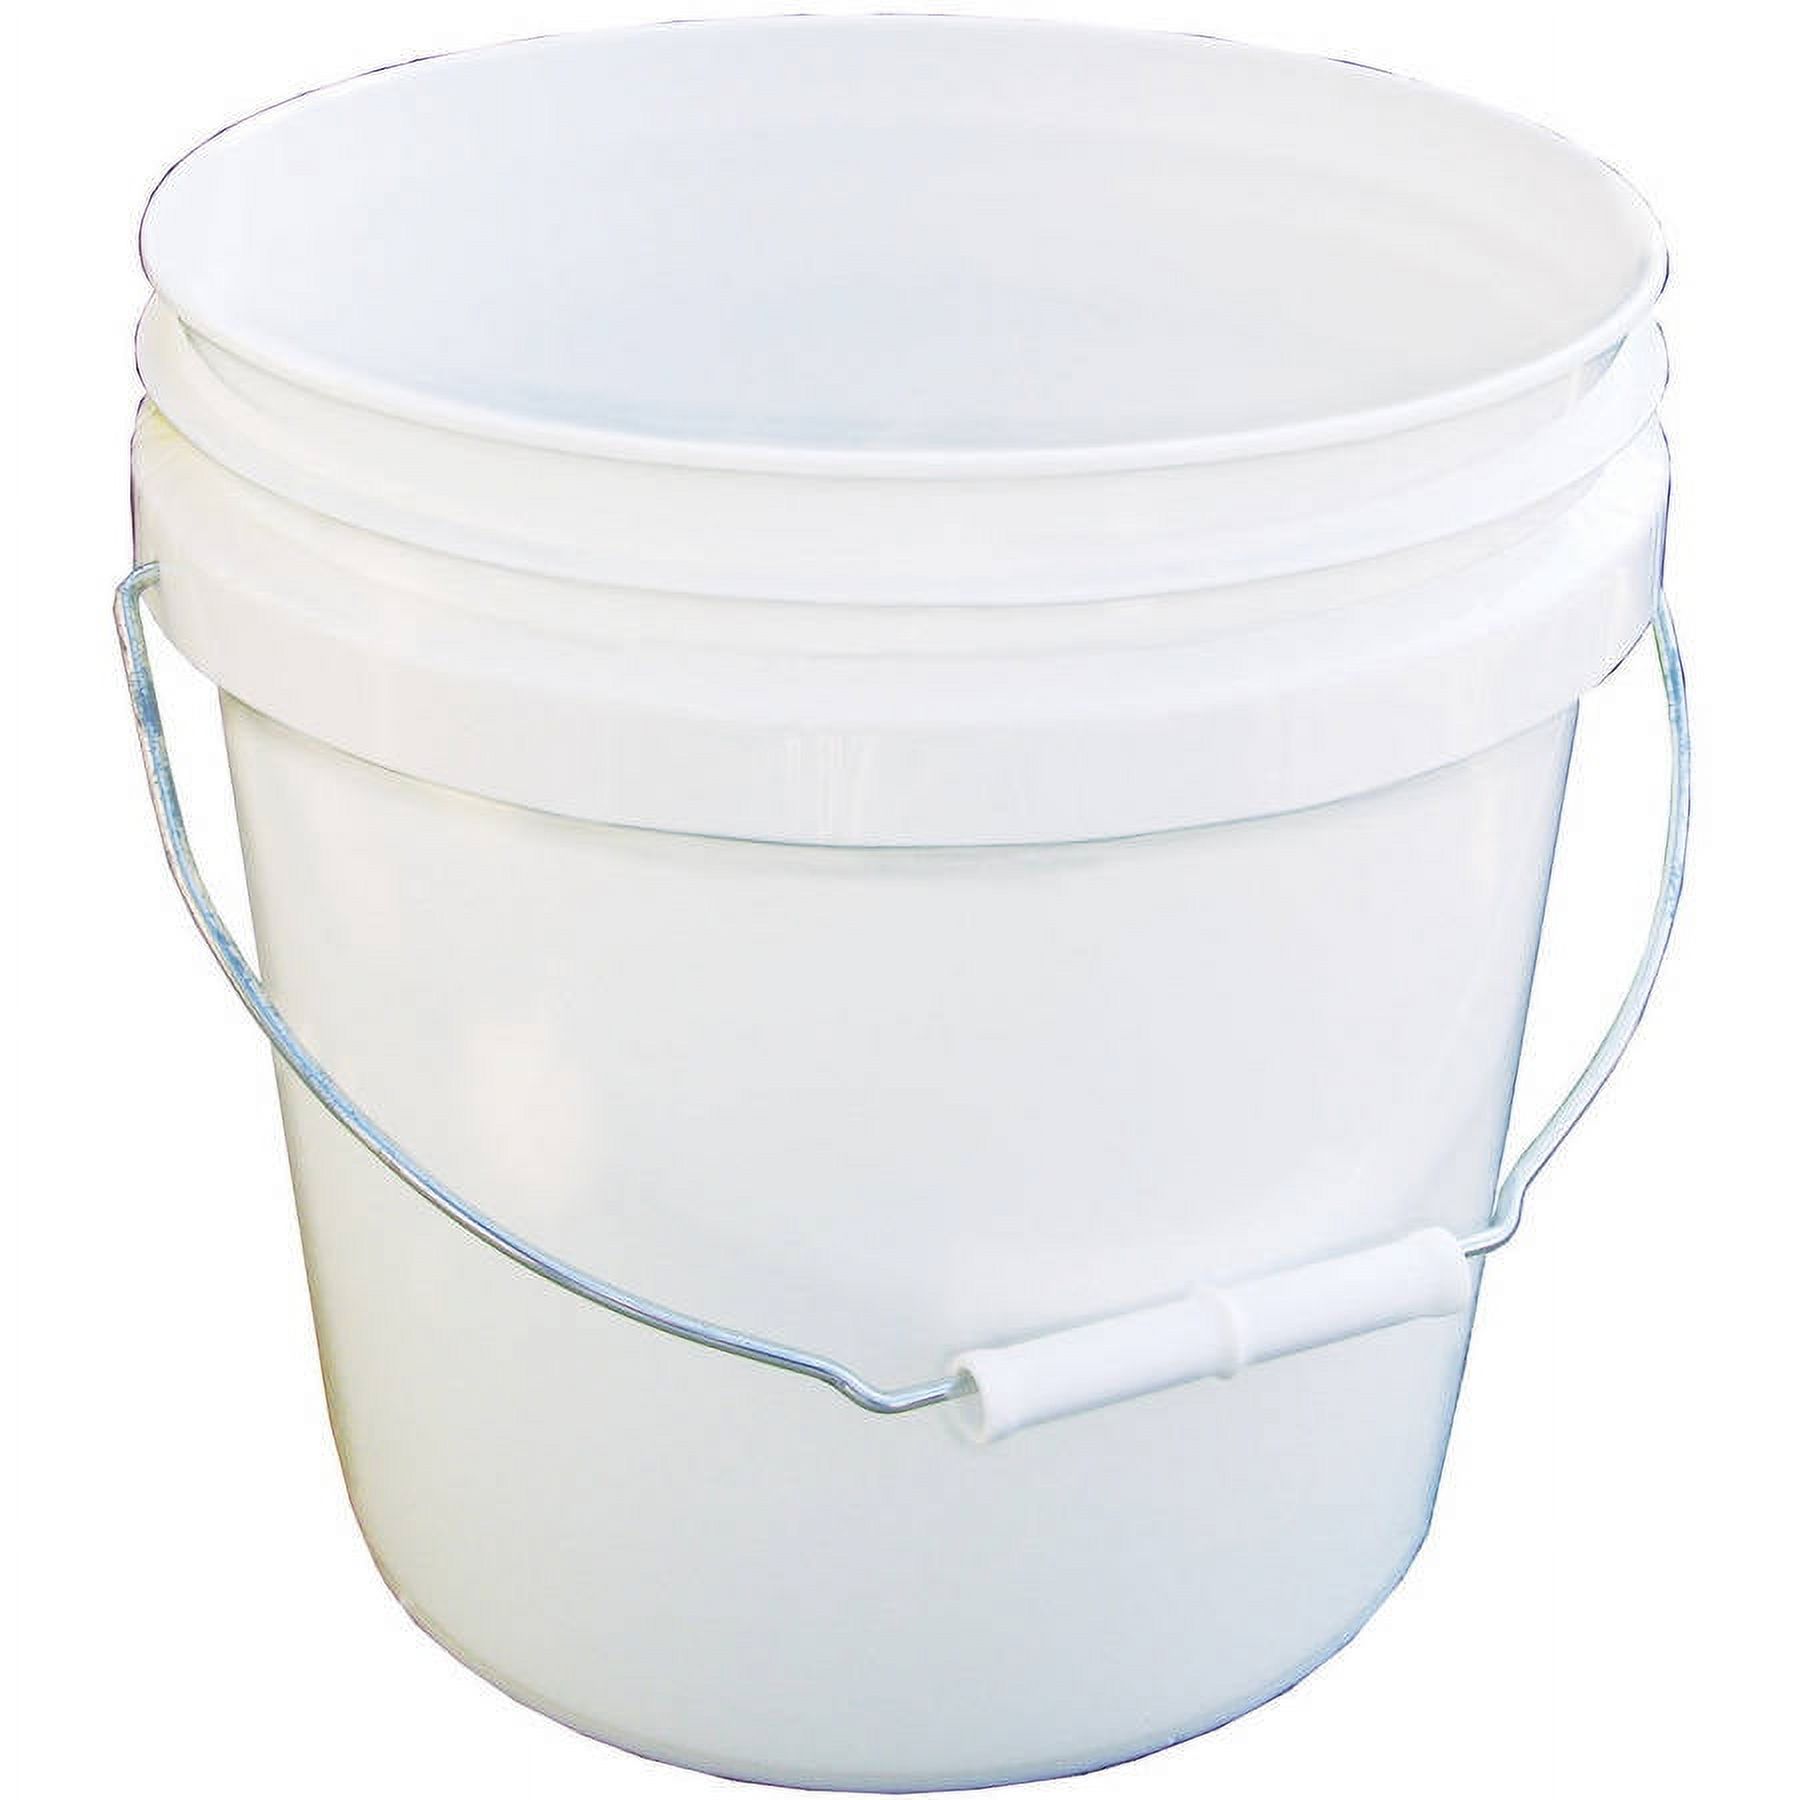 Encore Plastics Corp. 2 Gallon Plastic Pail/ Bucket, White - image 1 of 2